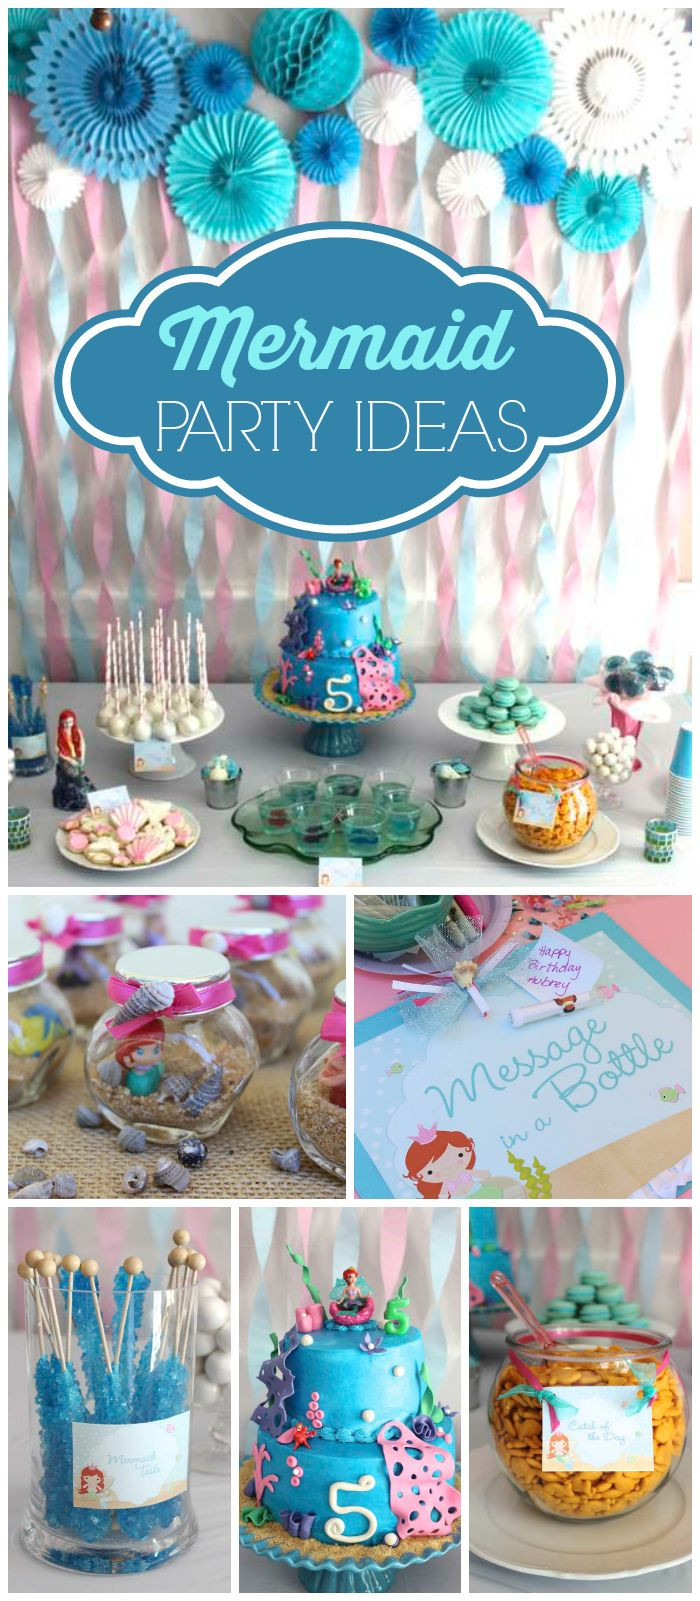 Little Mermaid Birthday Party Ideas Games
 25 best ideas about Mermaid party games on Pinterest